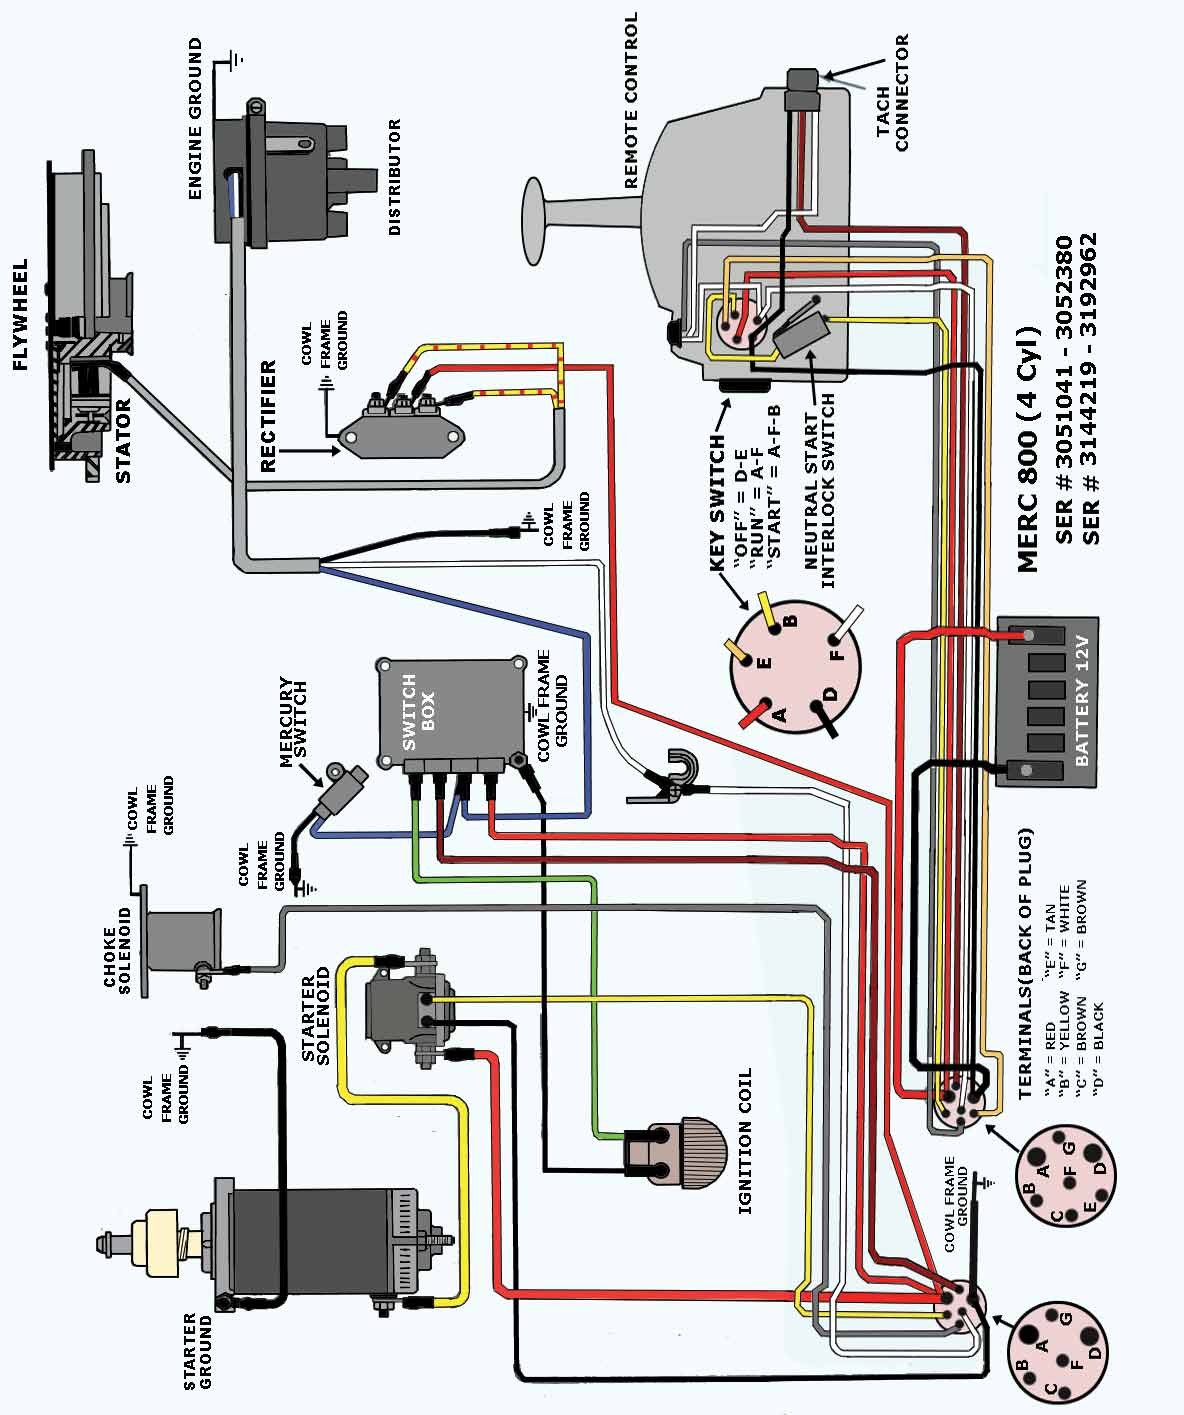 wire tuggers ag mercury diagram electrical work wiring diagram u2022 rh wiringdiagramshop today